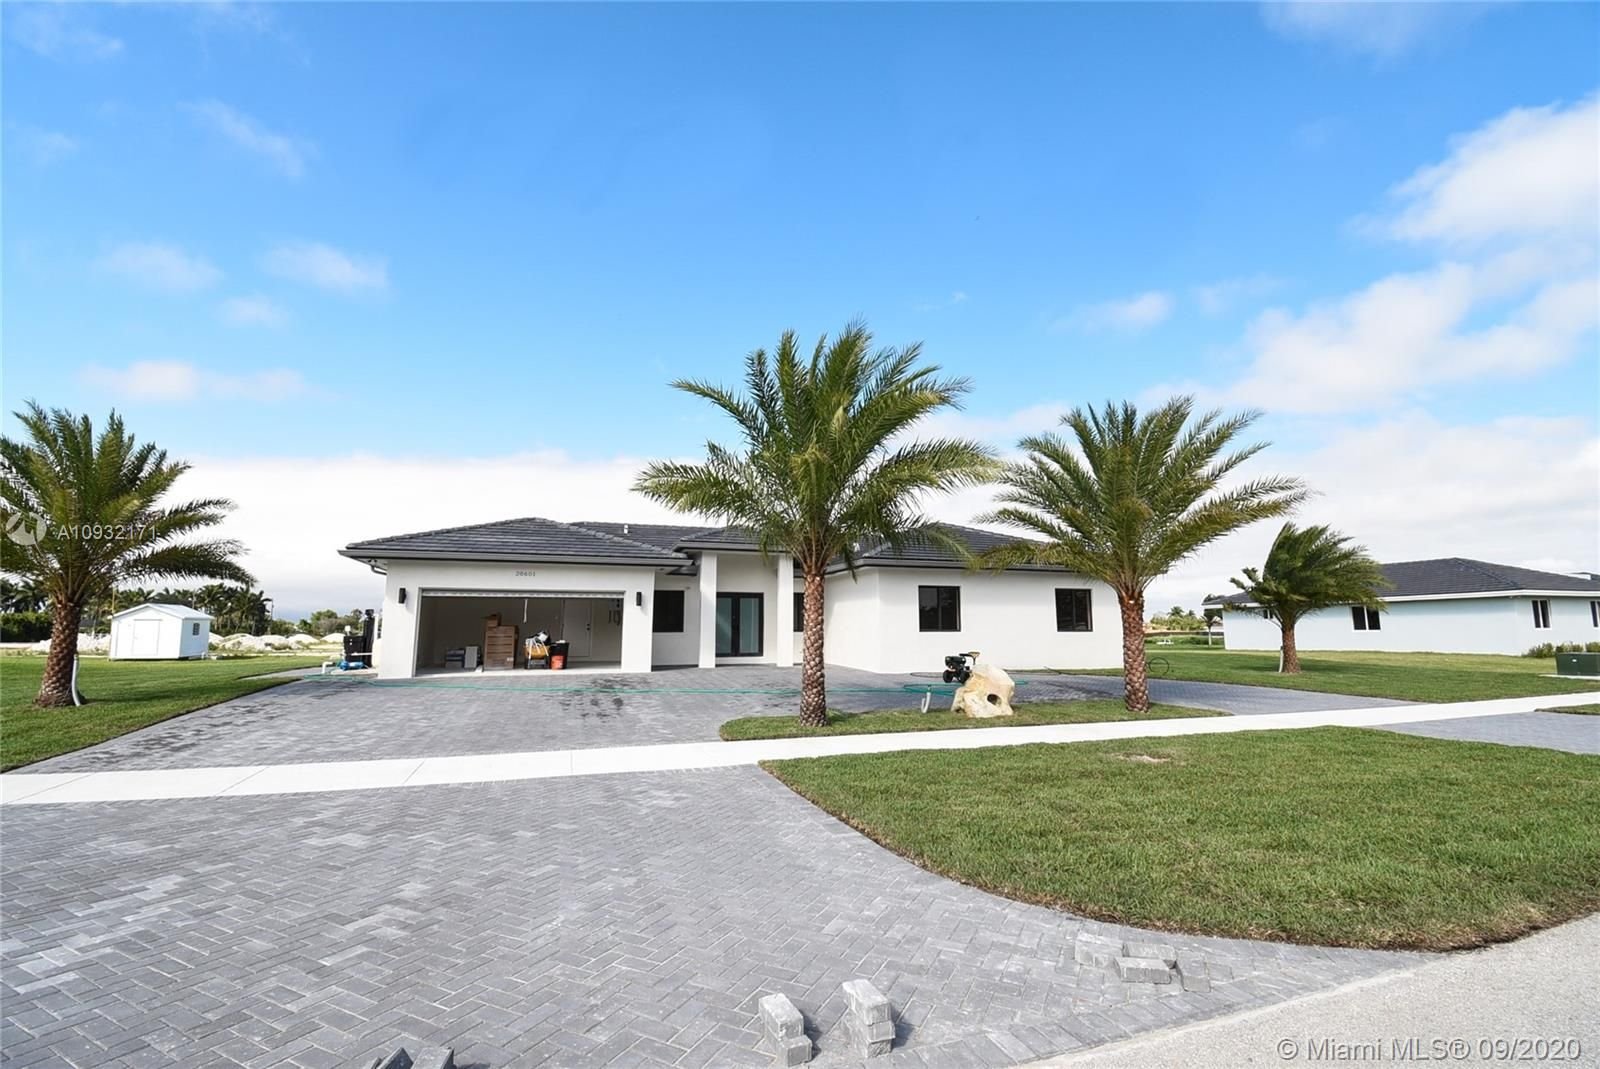 Real estate property located at 20650 319th St, Miami-Dade County, Miami, FL